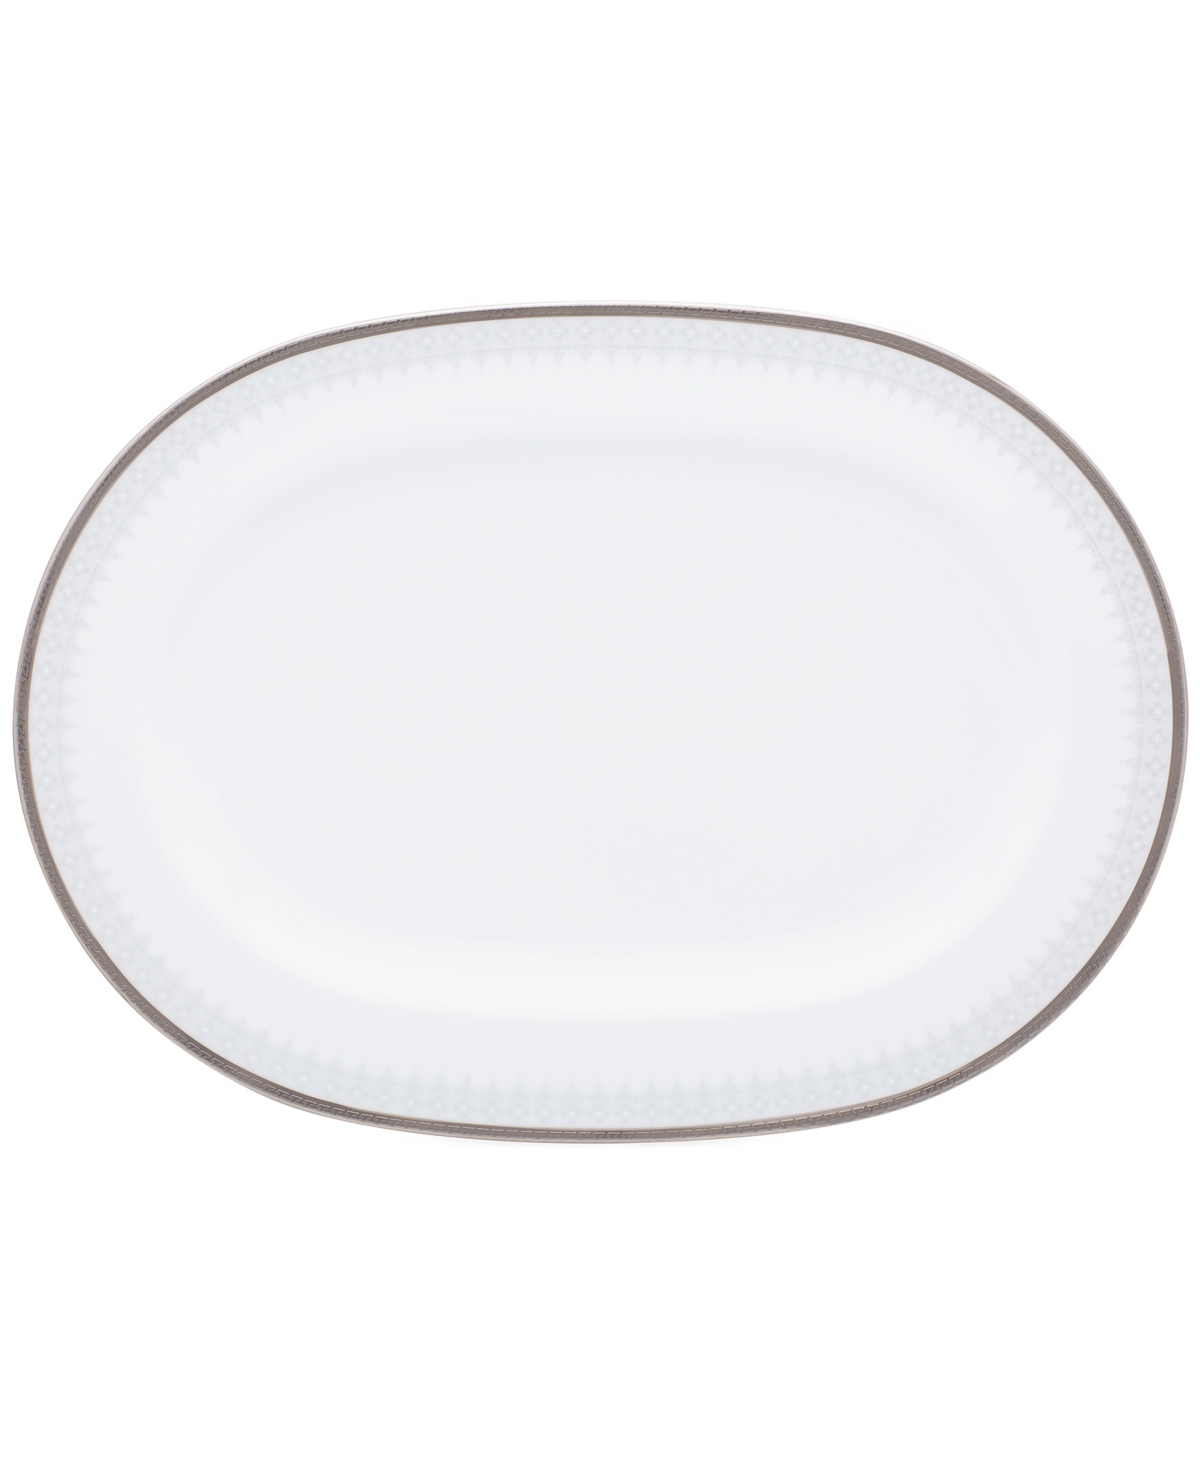 Noritake Silver Colonnade Oval Platter, 14" In White